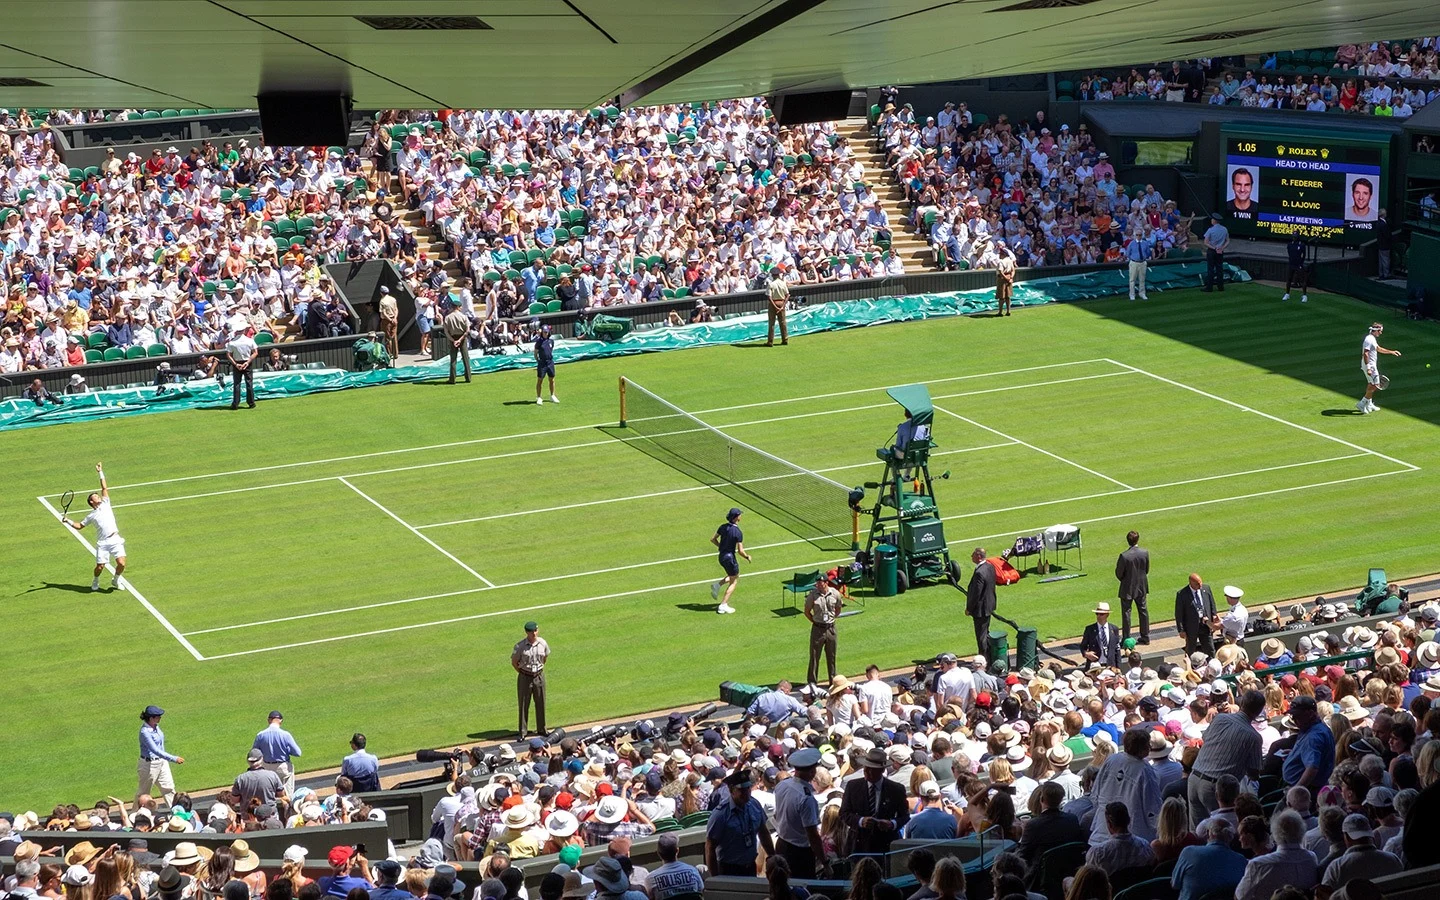 Centre Court at Wimbledon Tennis Championships